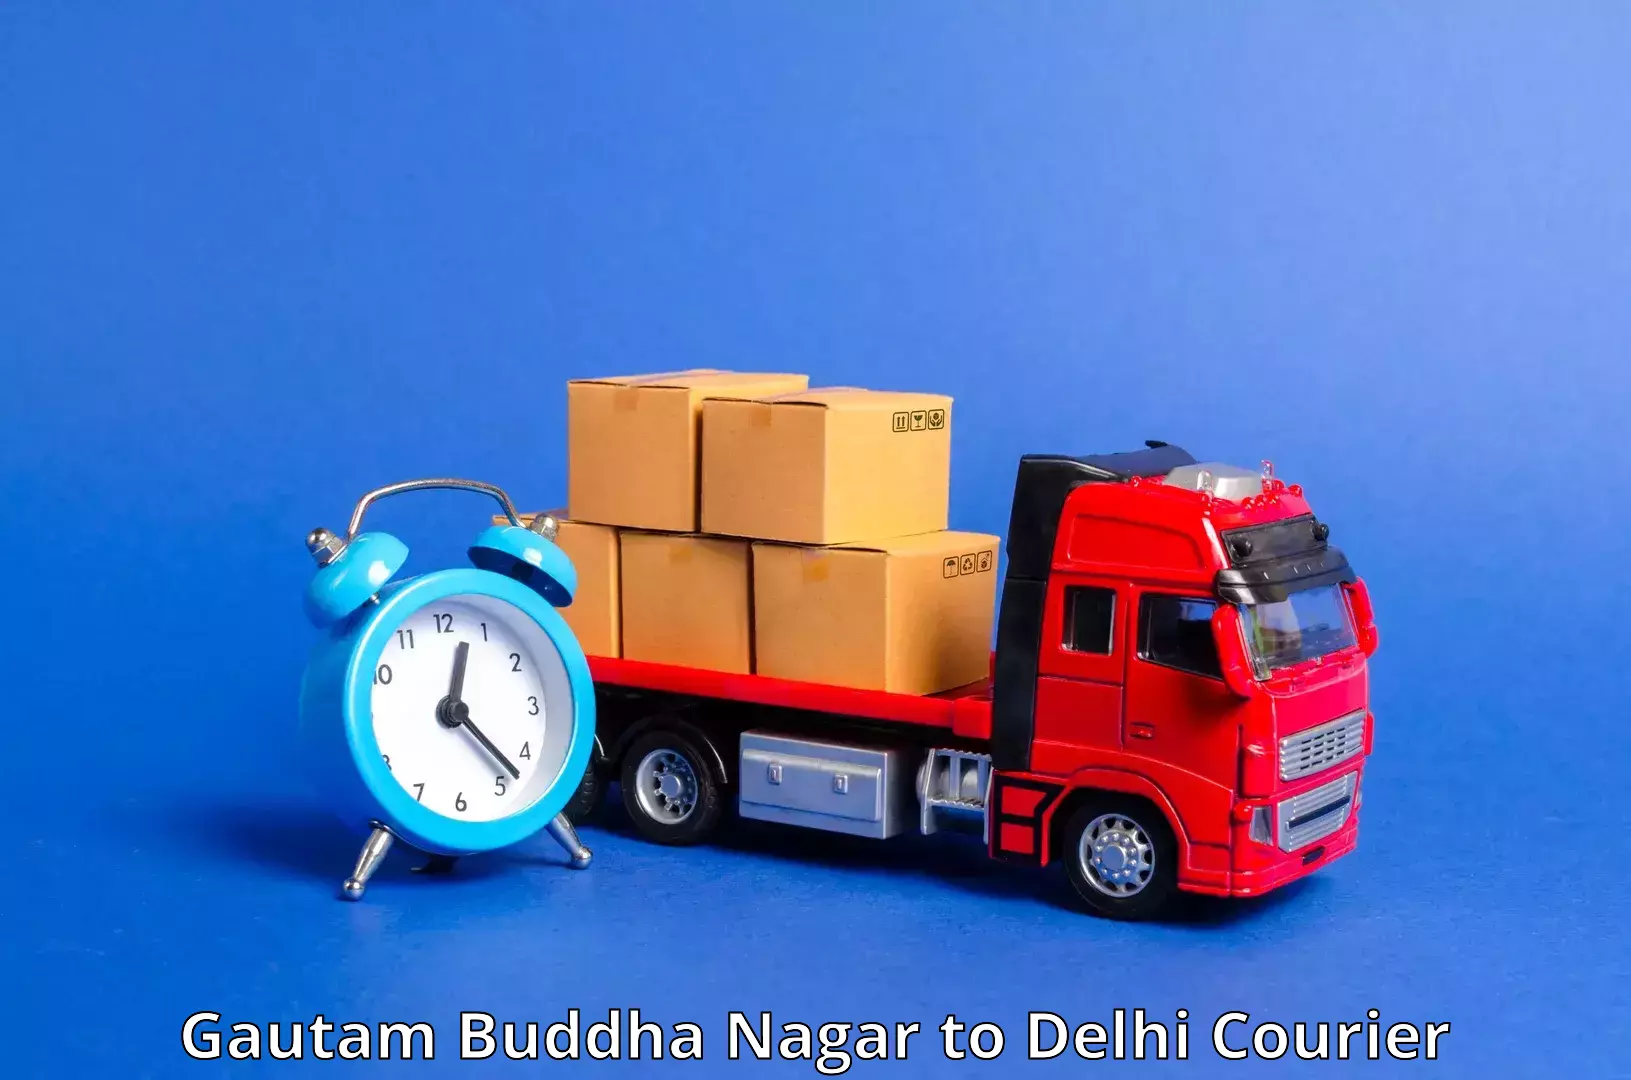 Express delivery network Gautam Buddha Nagar to Sansad Marg